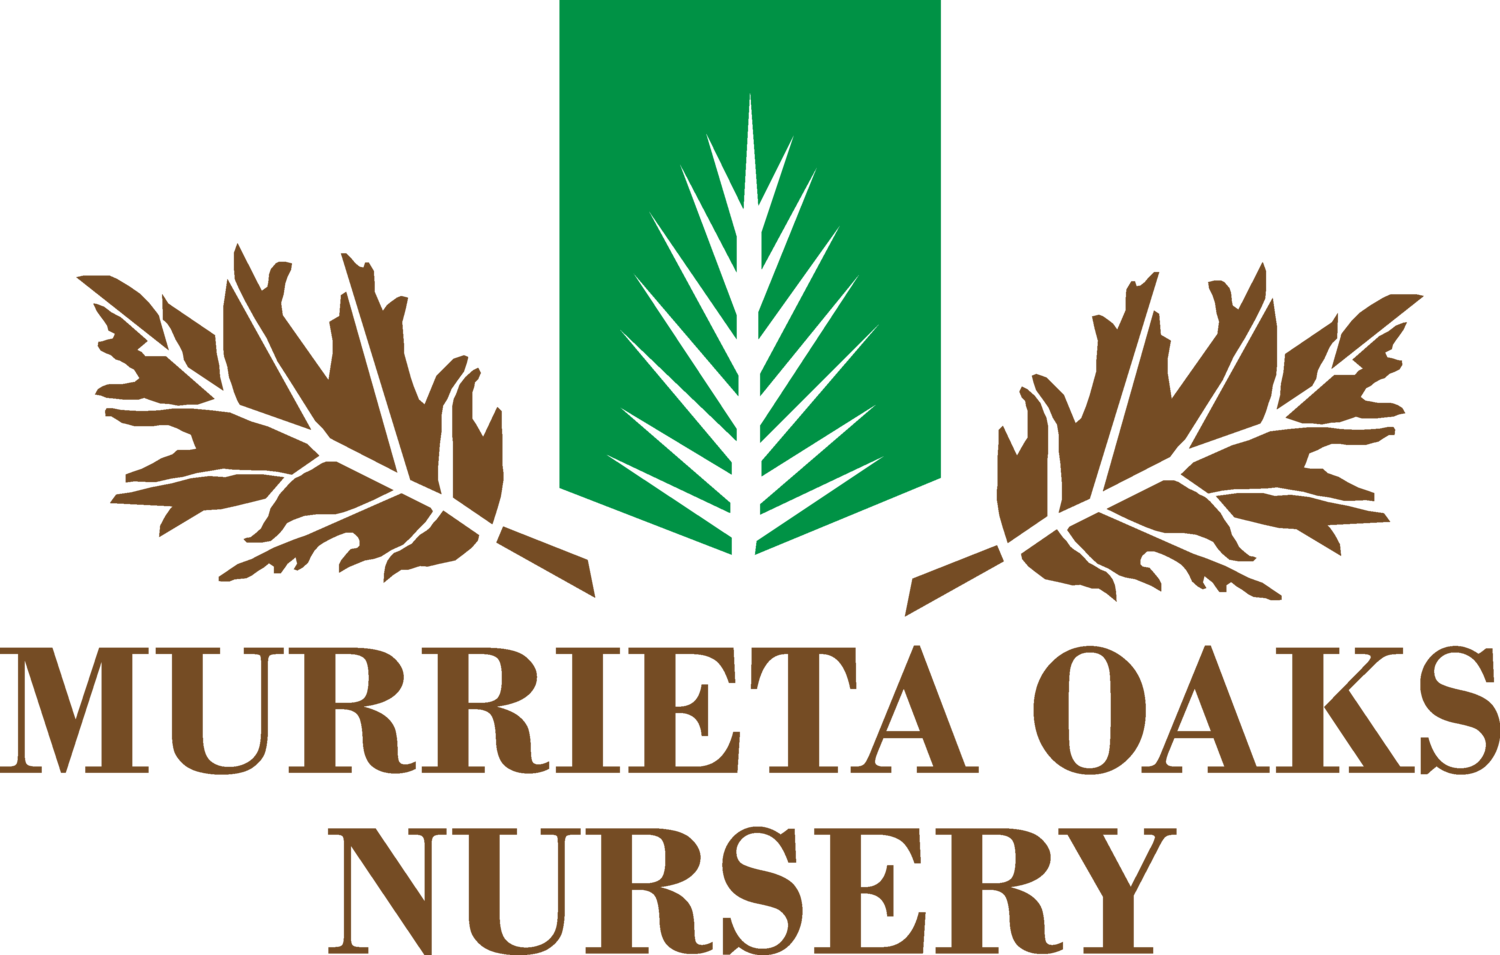 Murrieta Oaks Nursery